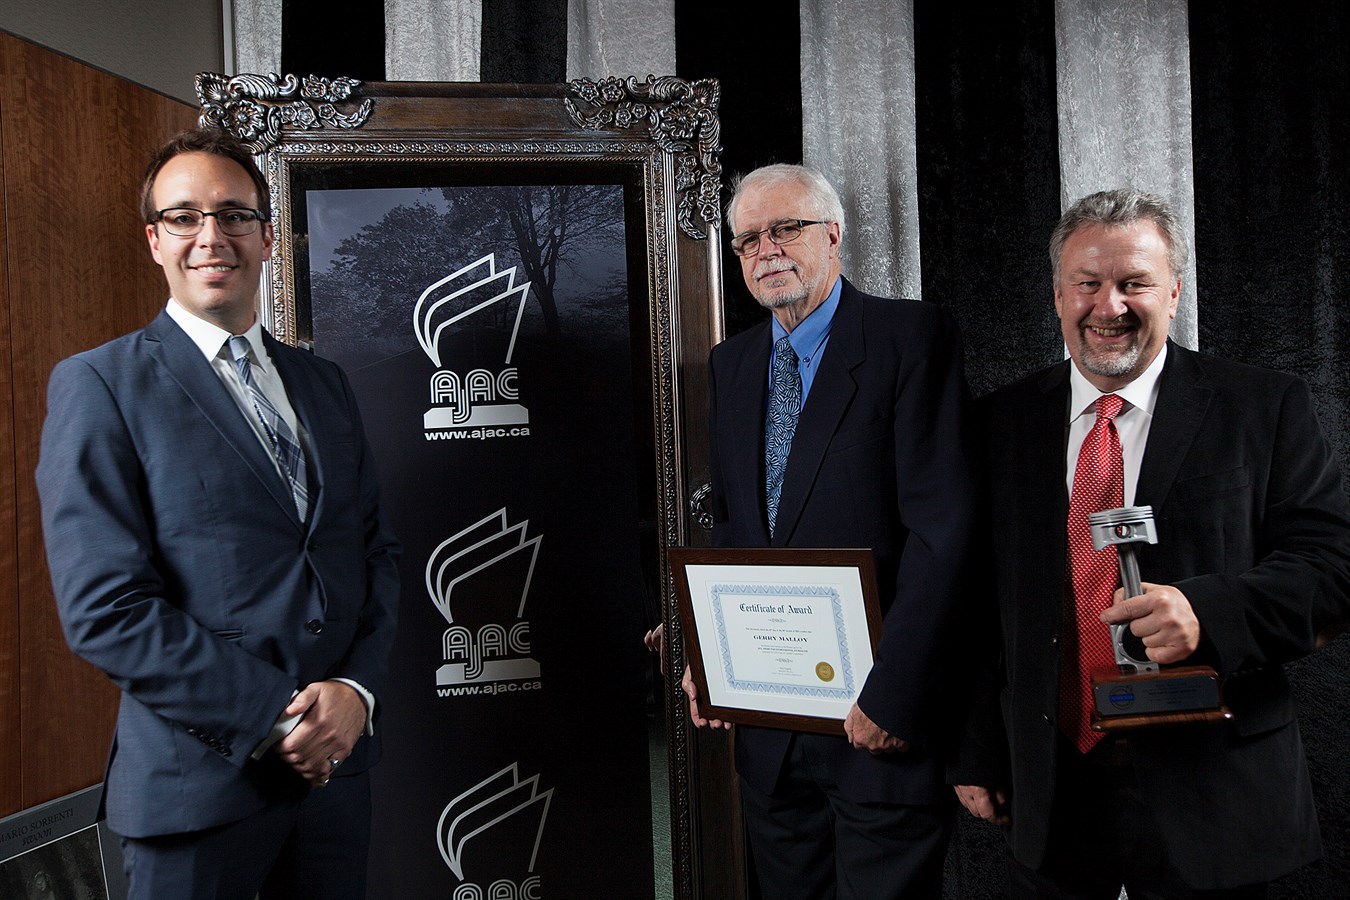 Paul Williams wins 2012 Volvo Award for Environmental Journalism